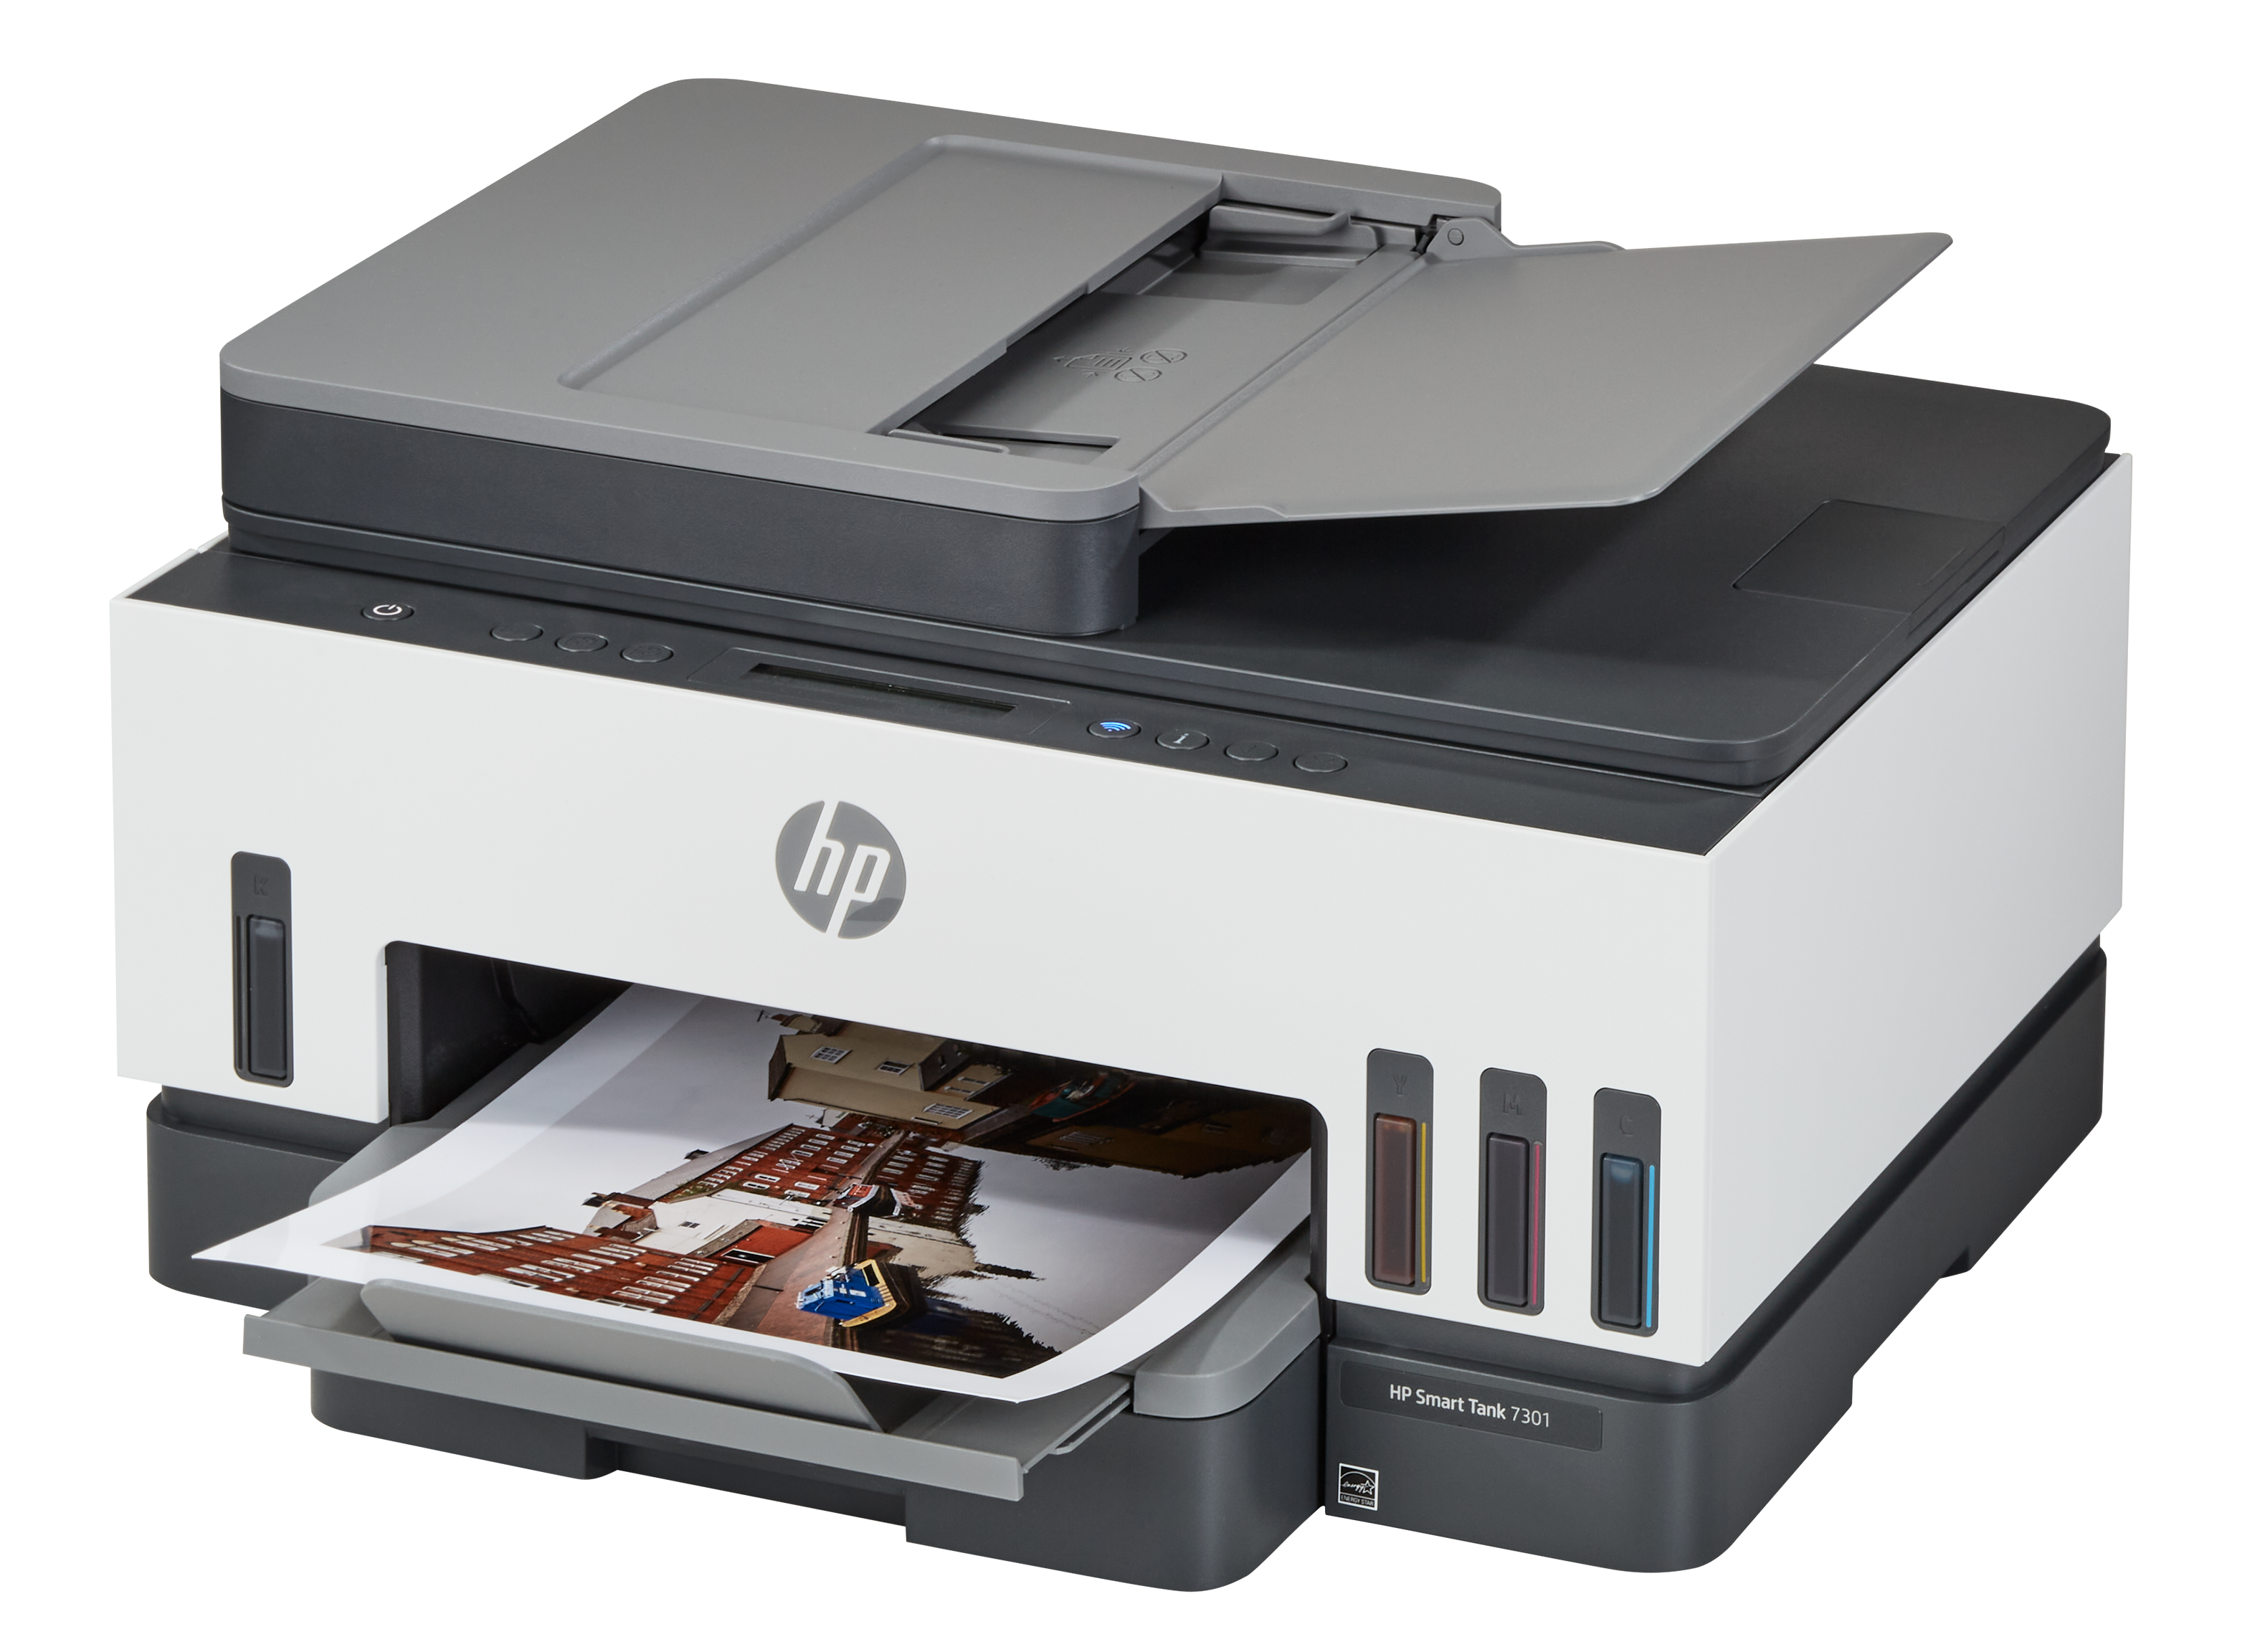 HP Smart Tank 7301 Printer Review - Consumer Reports